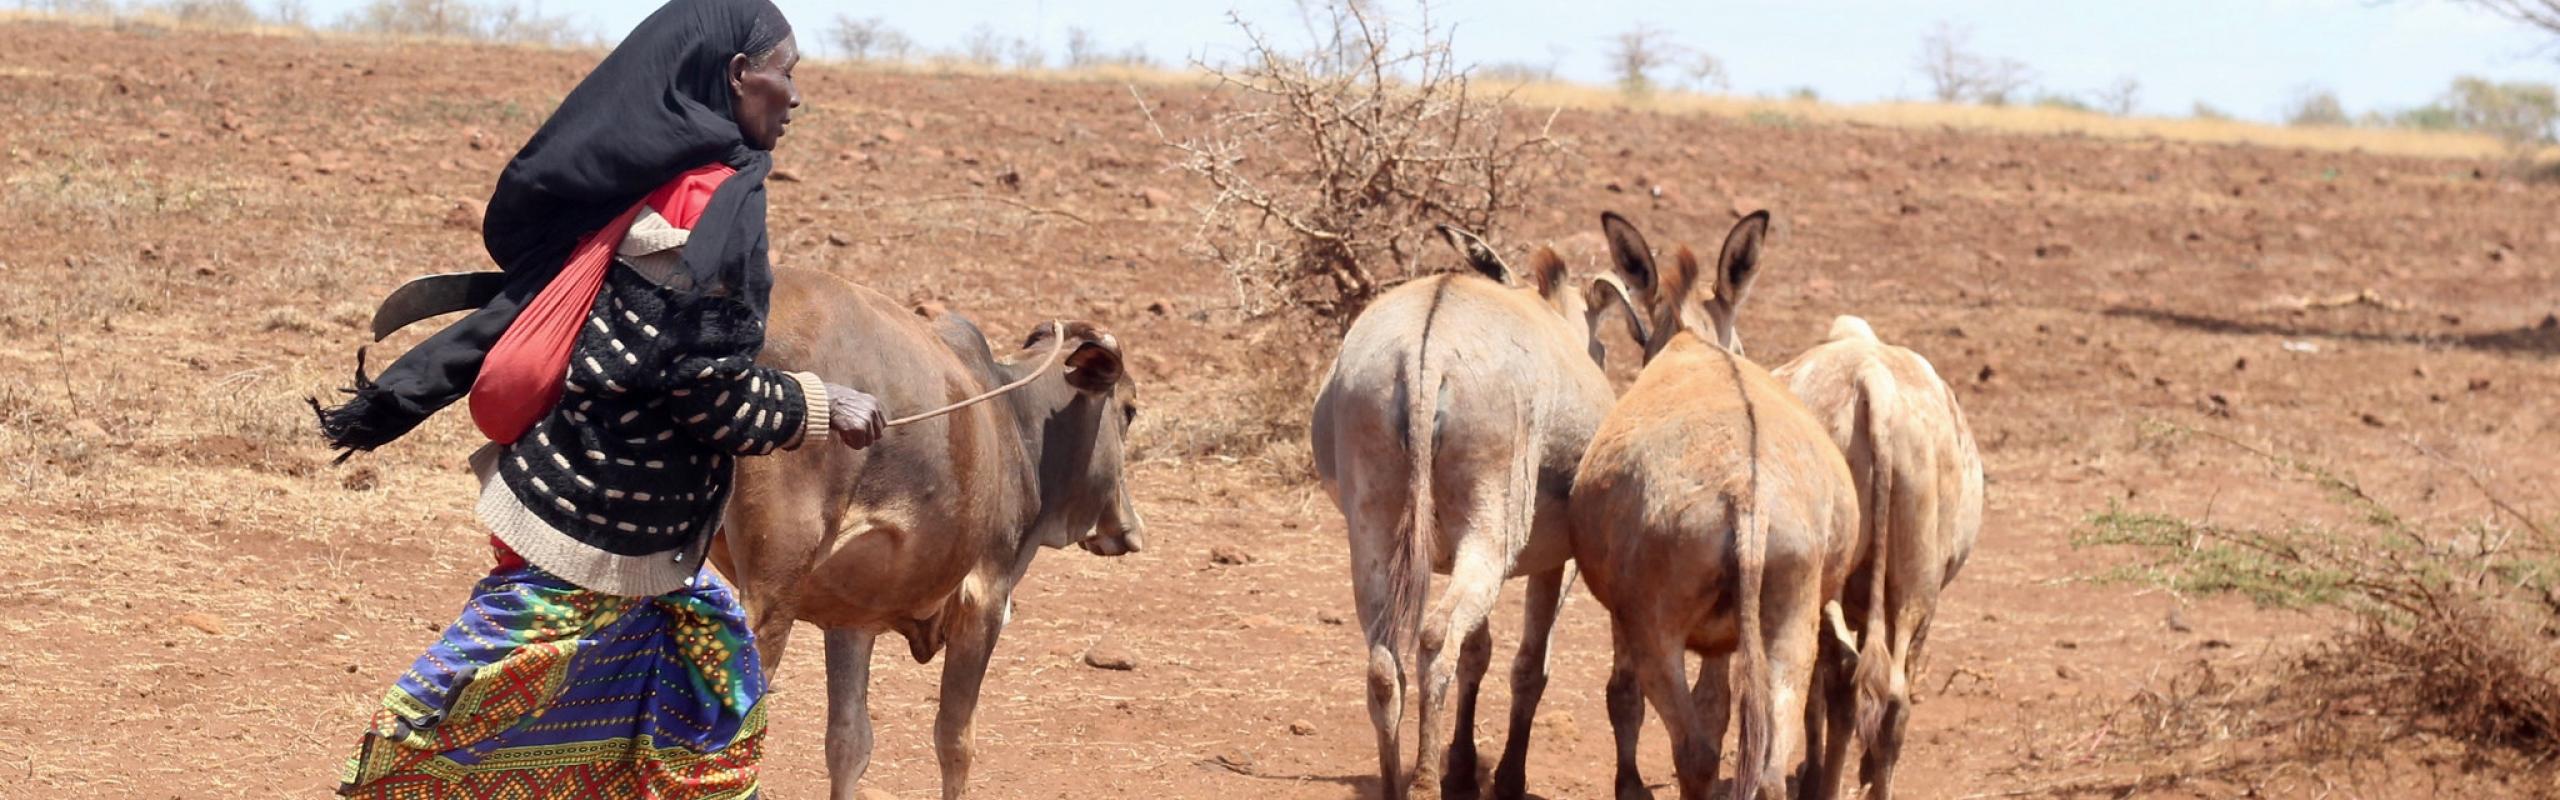 Woman pastoralist herds cattle through dusty field in rural Kenya